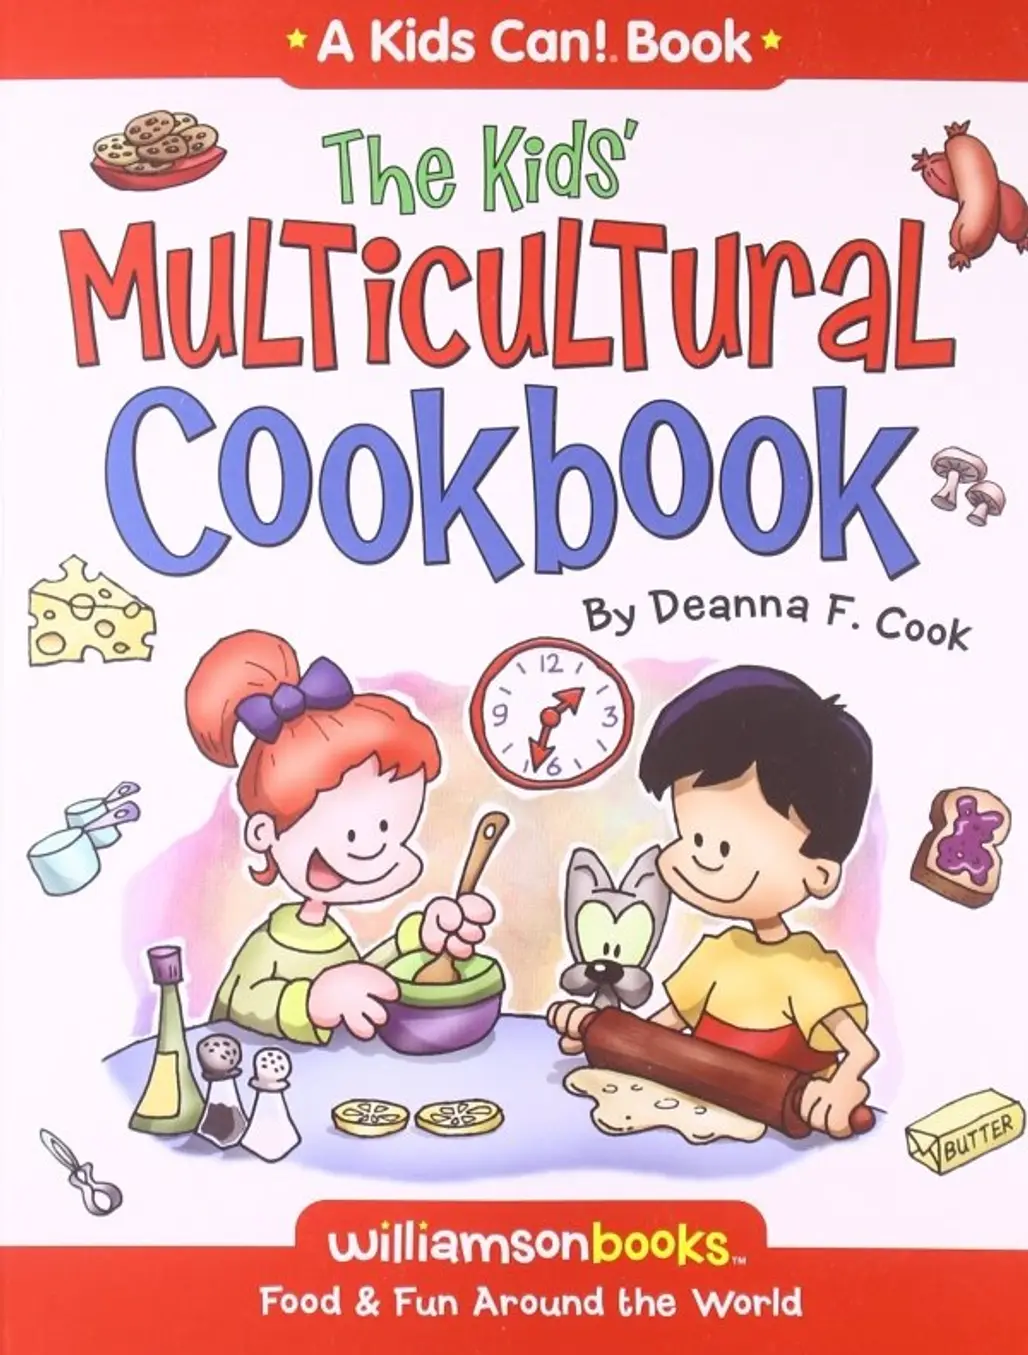 The Kids' Multicultural Cookbook